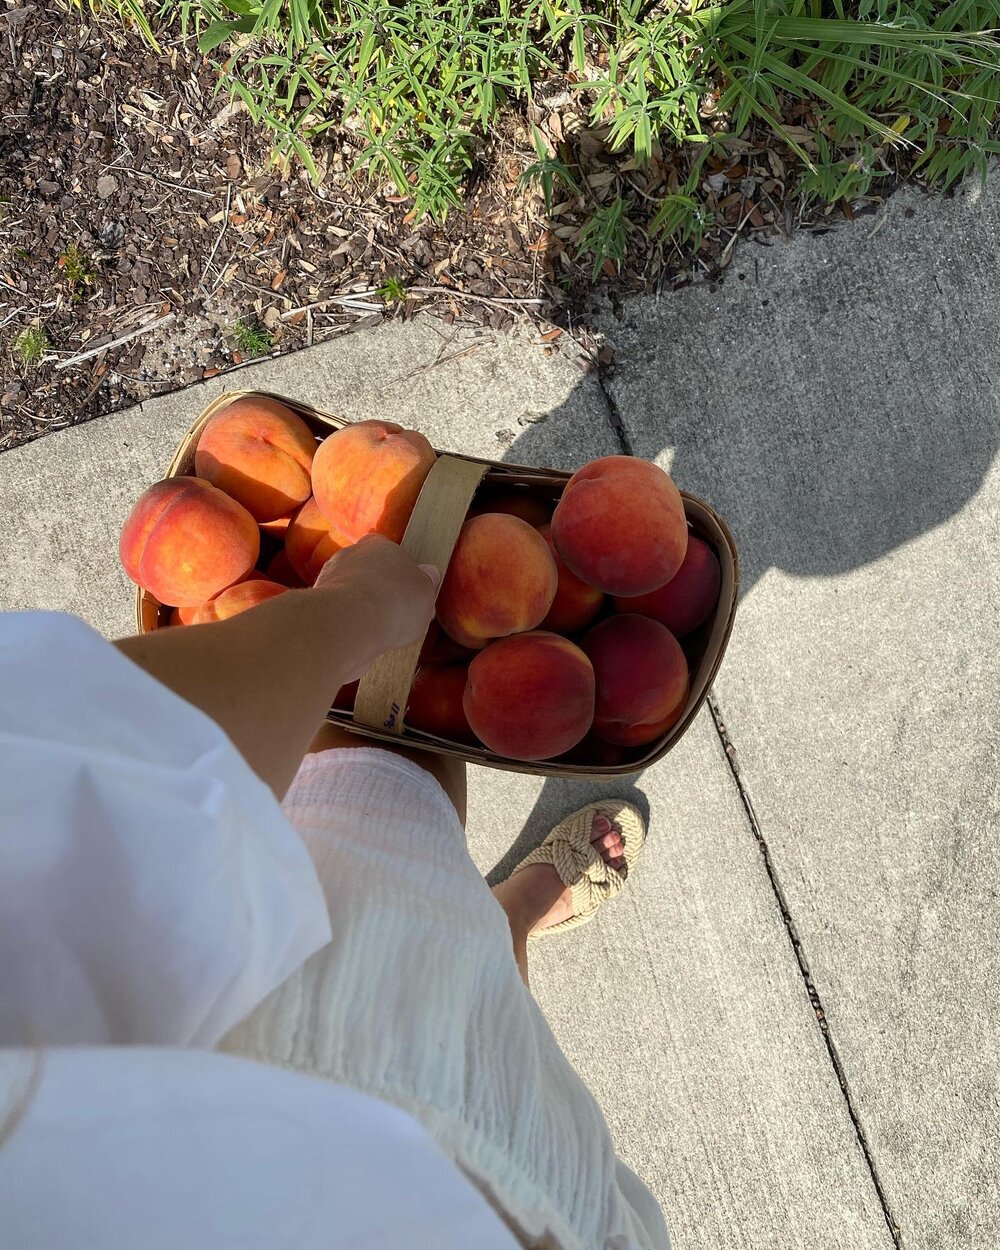 Just a girl &amp; her basket of fresh peaches 🍑 #peachseason #farmersmarket